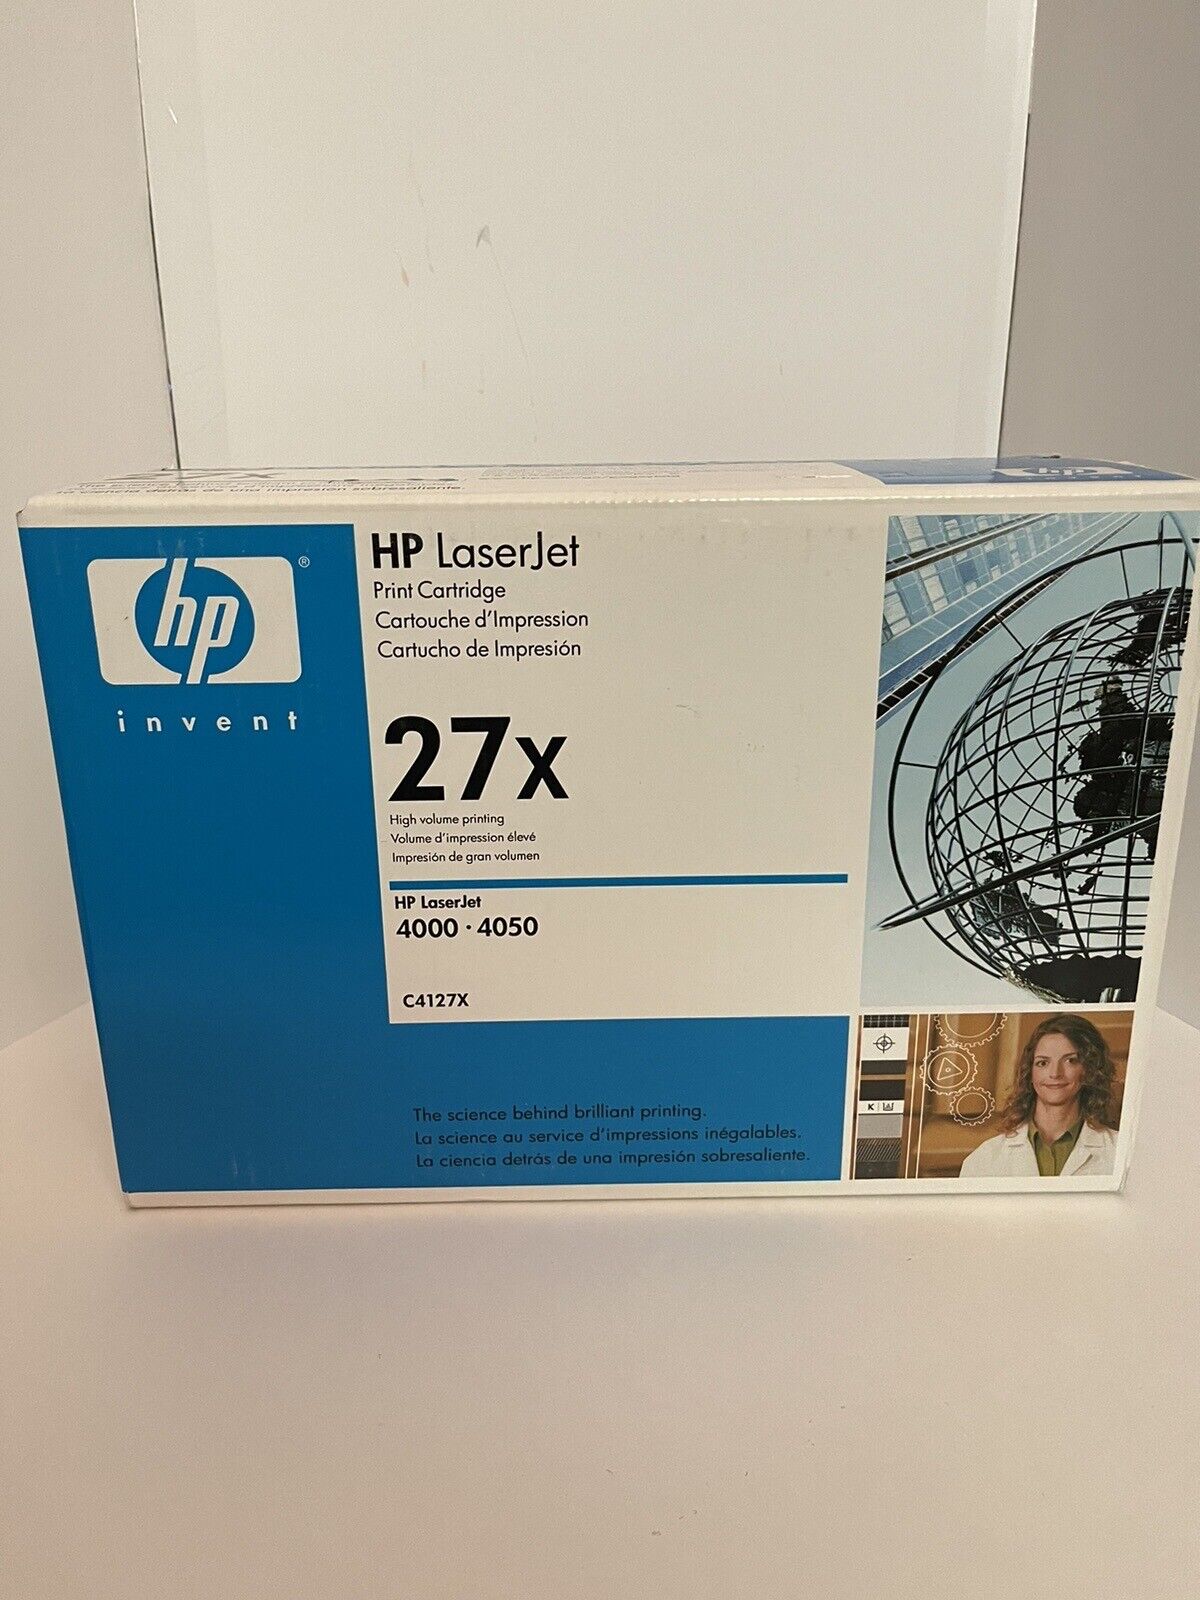 HP Invent Laserjet Print Cartridge 27x C4127X Sealed High Volume 4000 4050